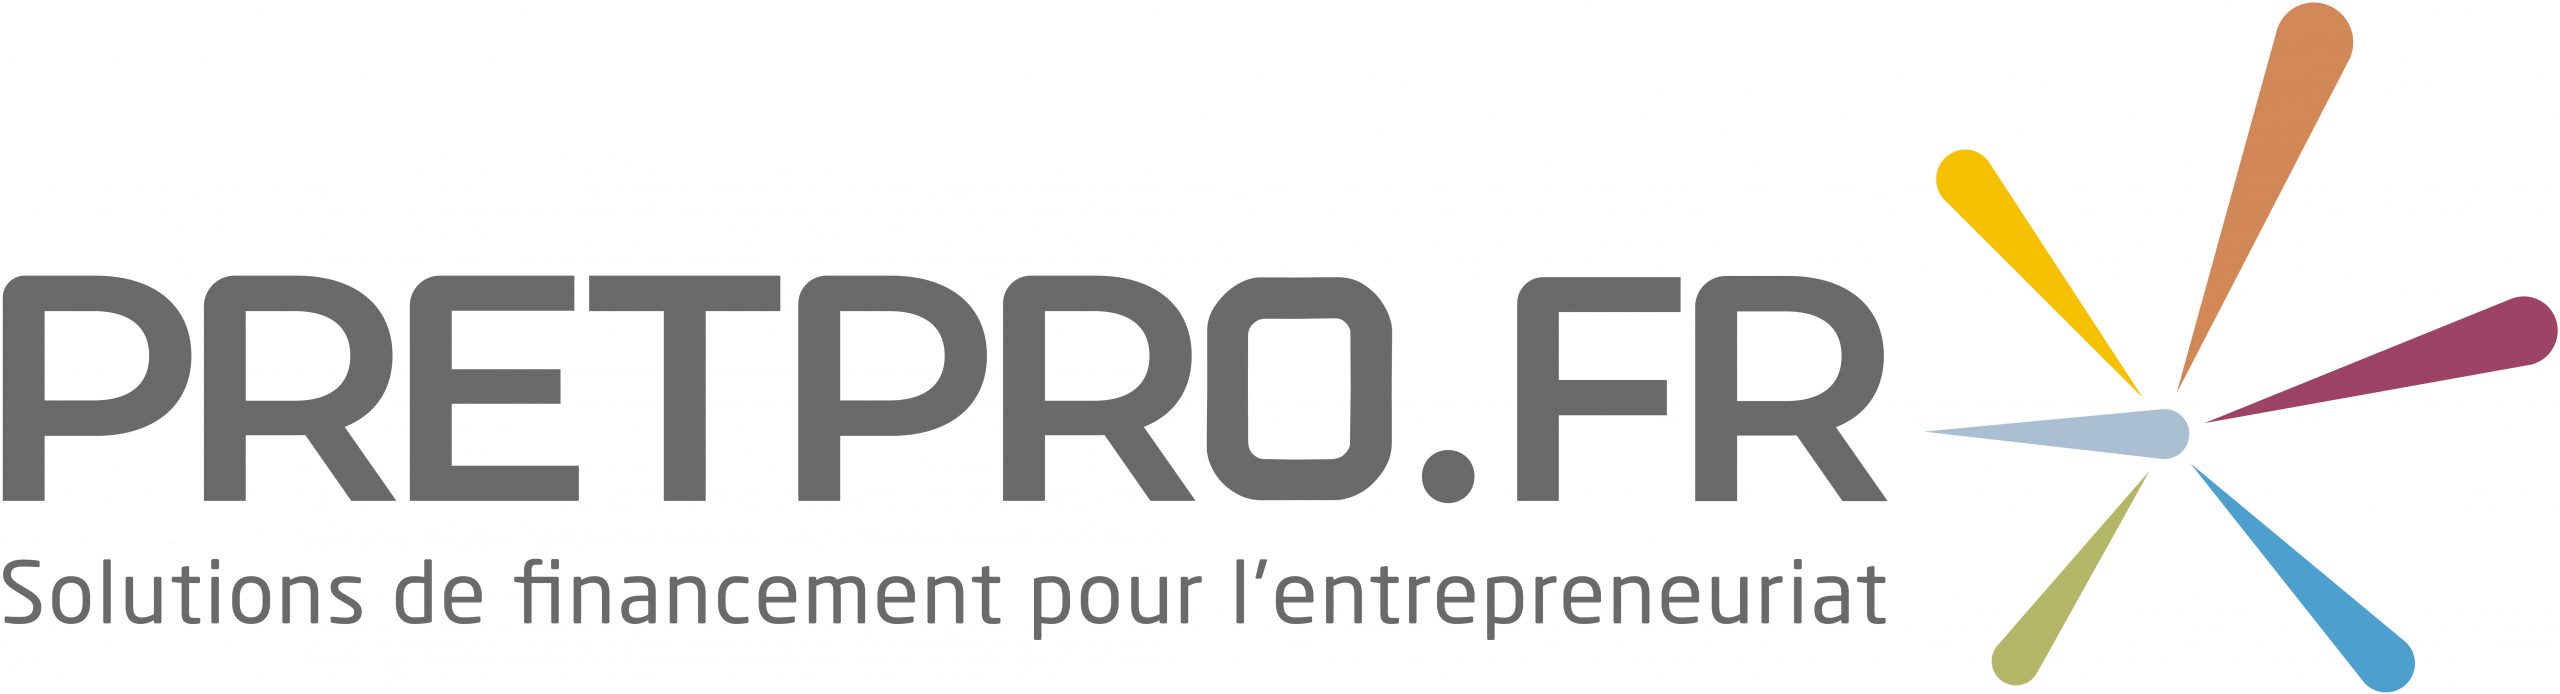 Pretpro.fr – Provence-Alpes-Côtes-d'Azur